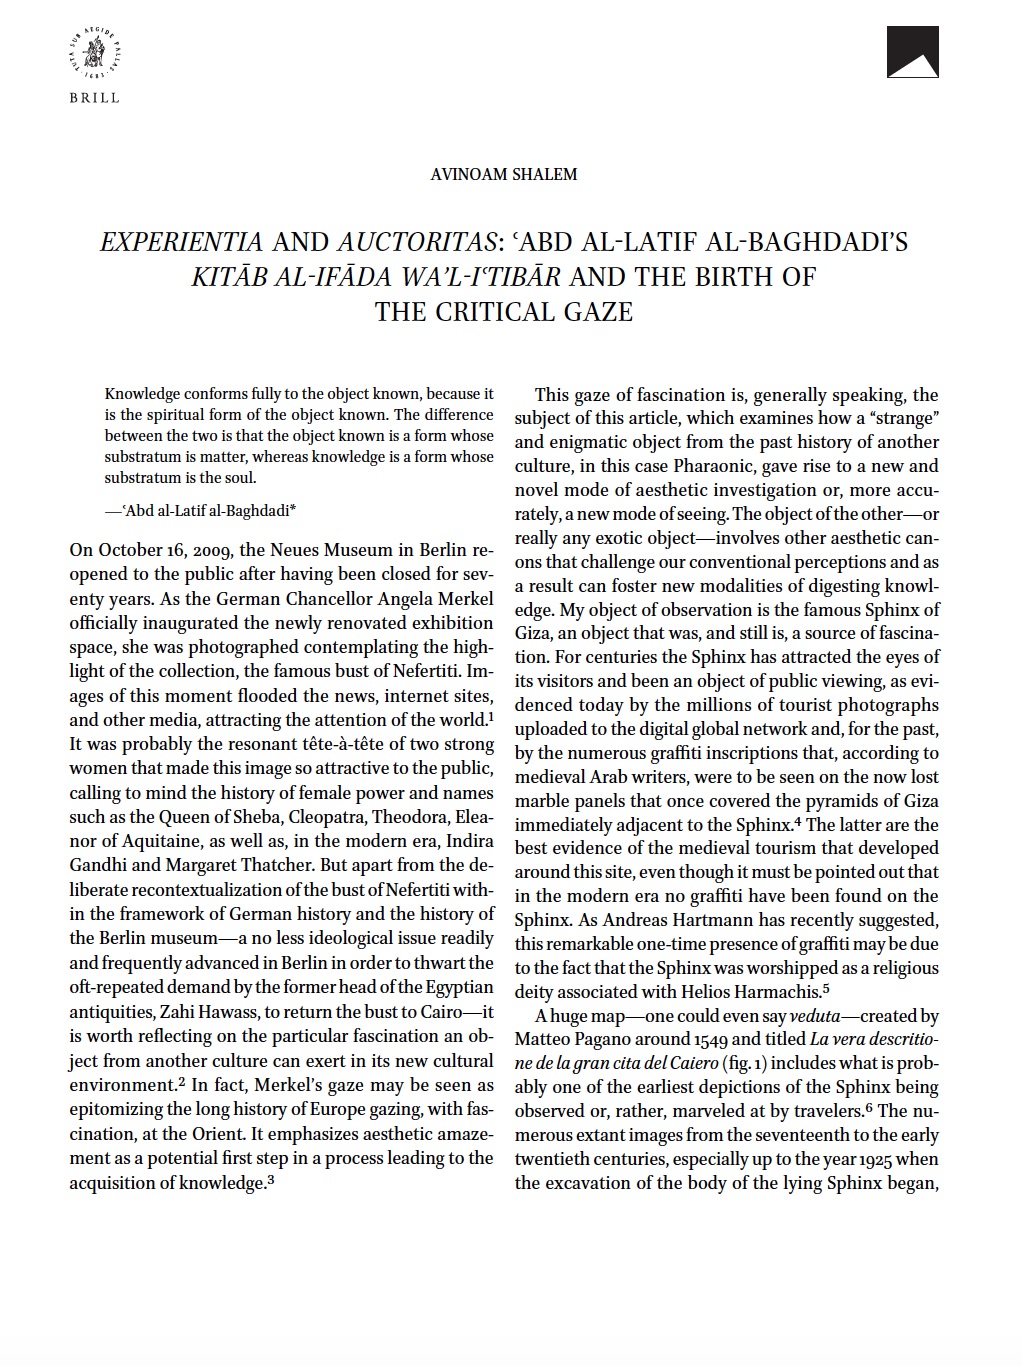 Experientia and Auctoritas: ʿAbd al-Latif al-Baghdadi’s Kitāb al-Ifāda wa’l-iʿtibār and the Birth of the Critical Gaze